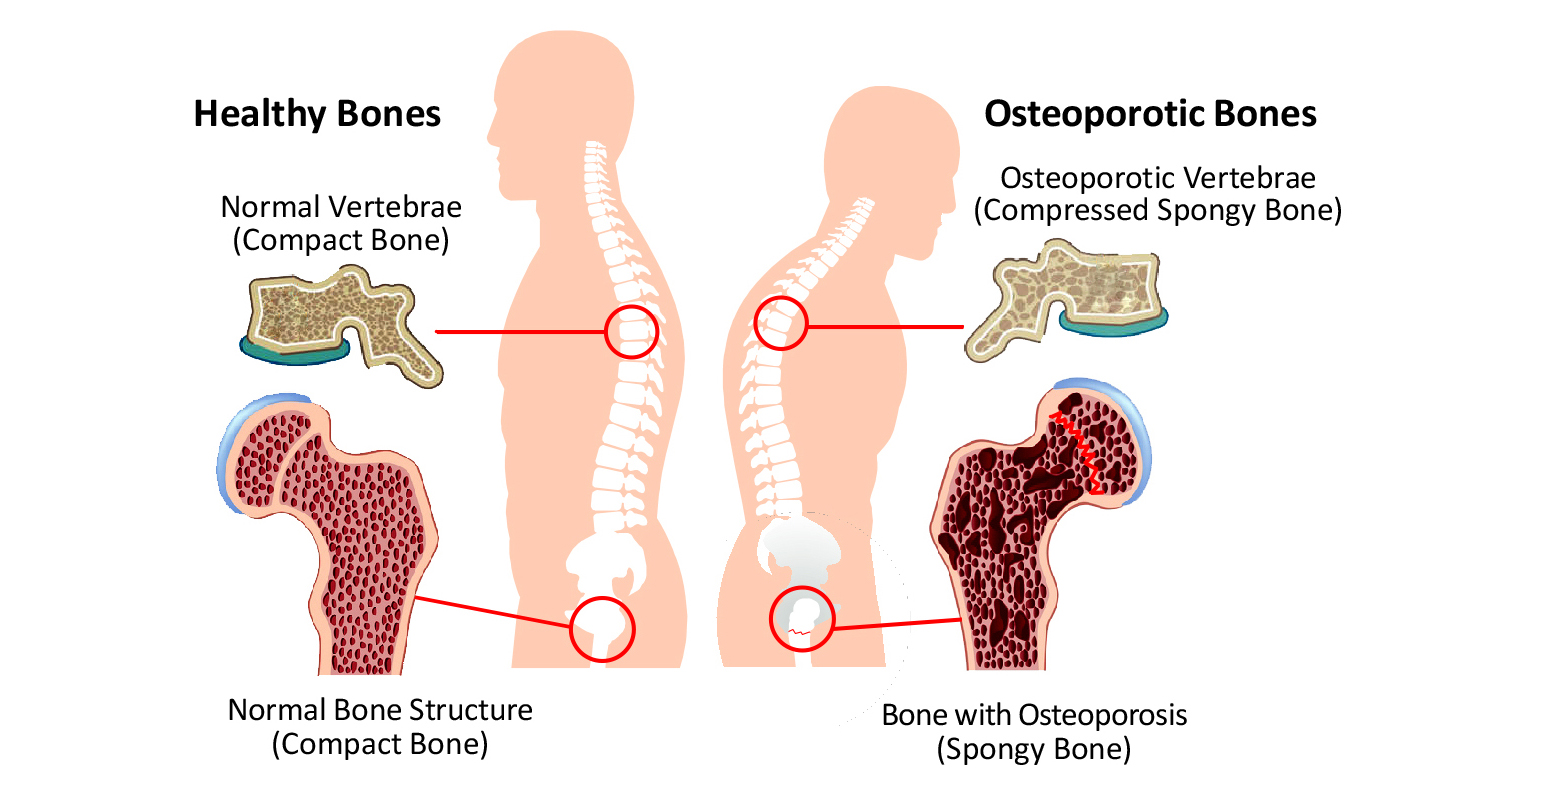 Que significa osteopenia